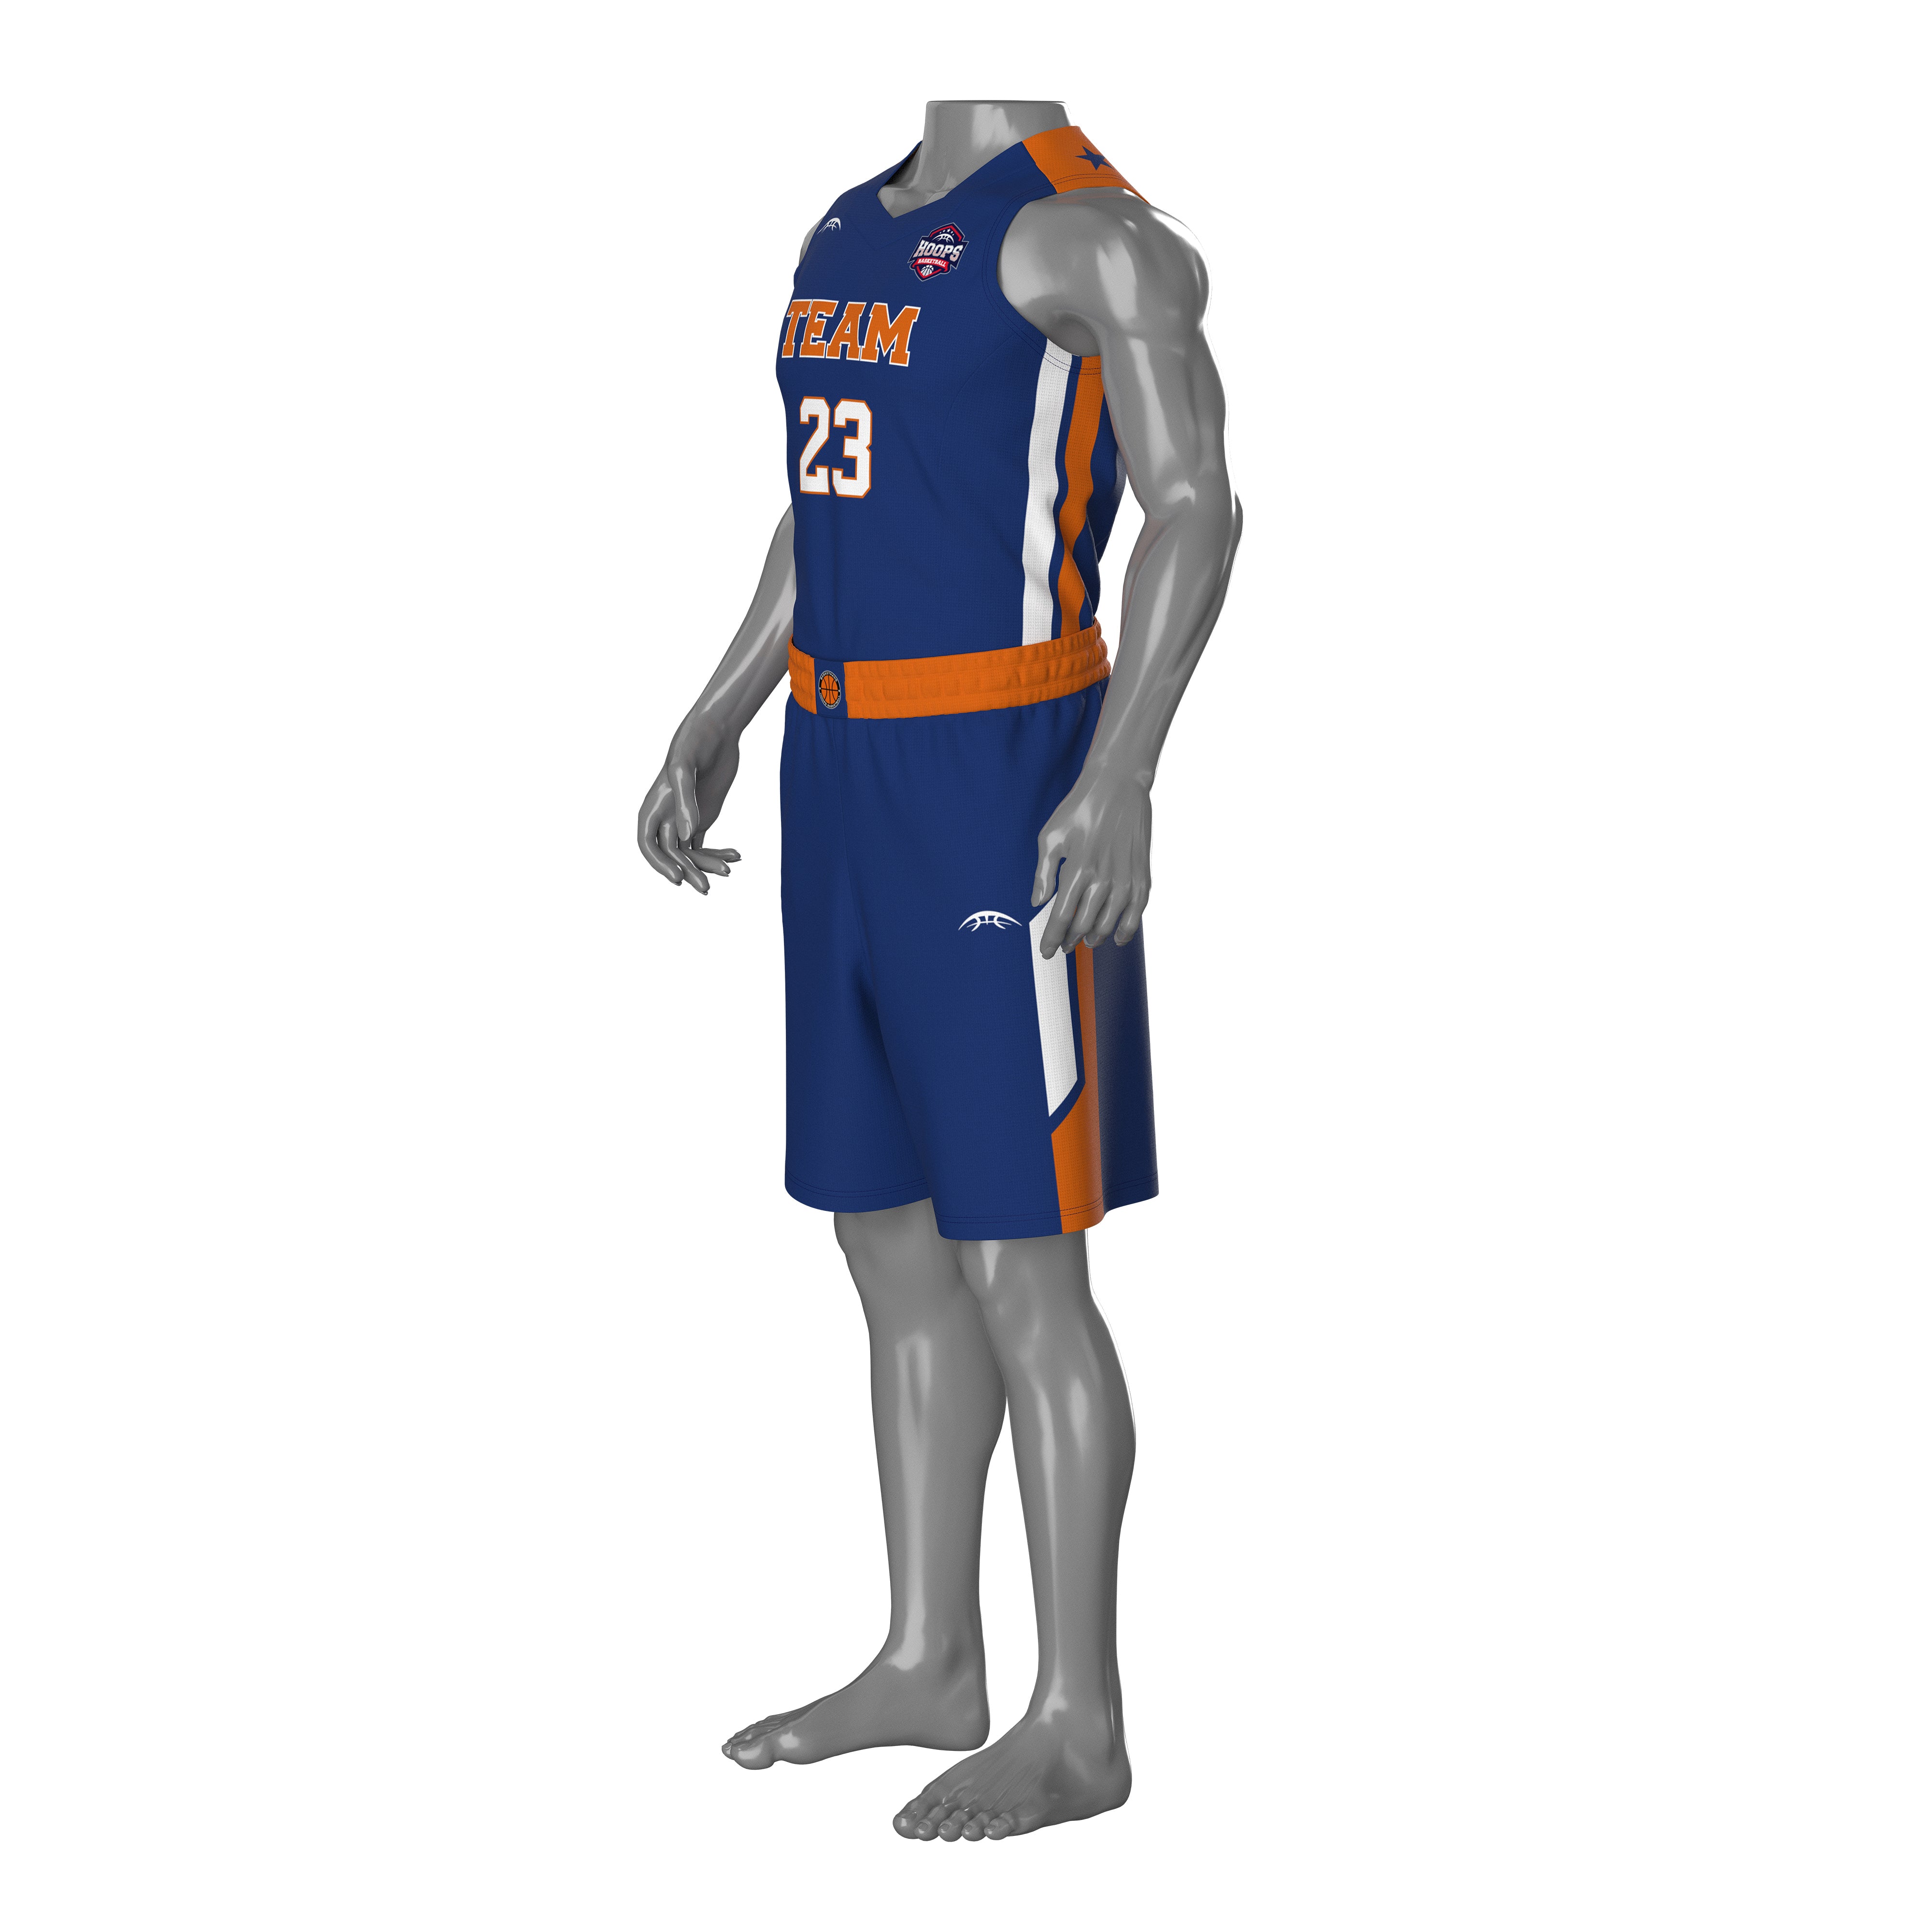  Custom Personalized Basketball Uniform Team Jersey